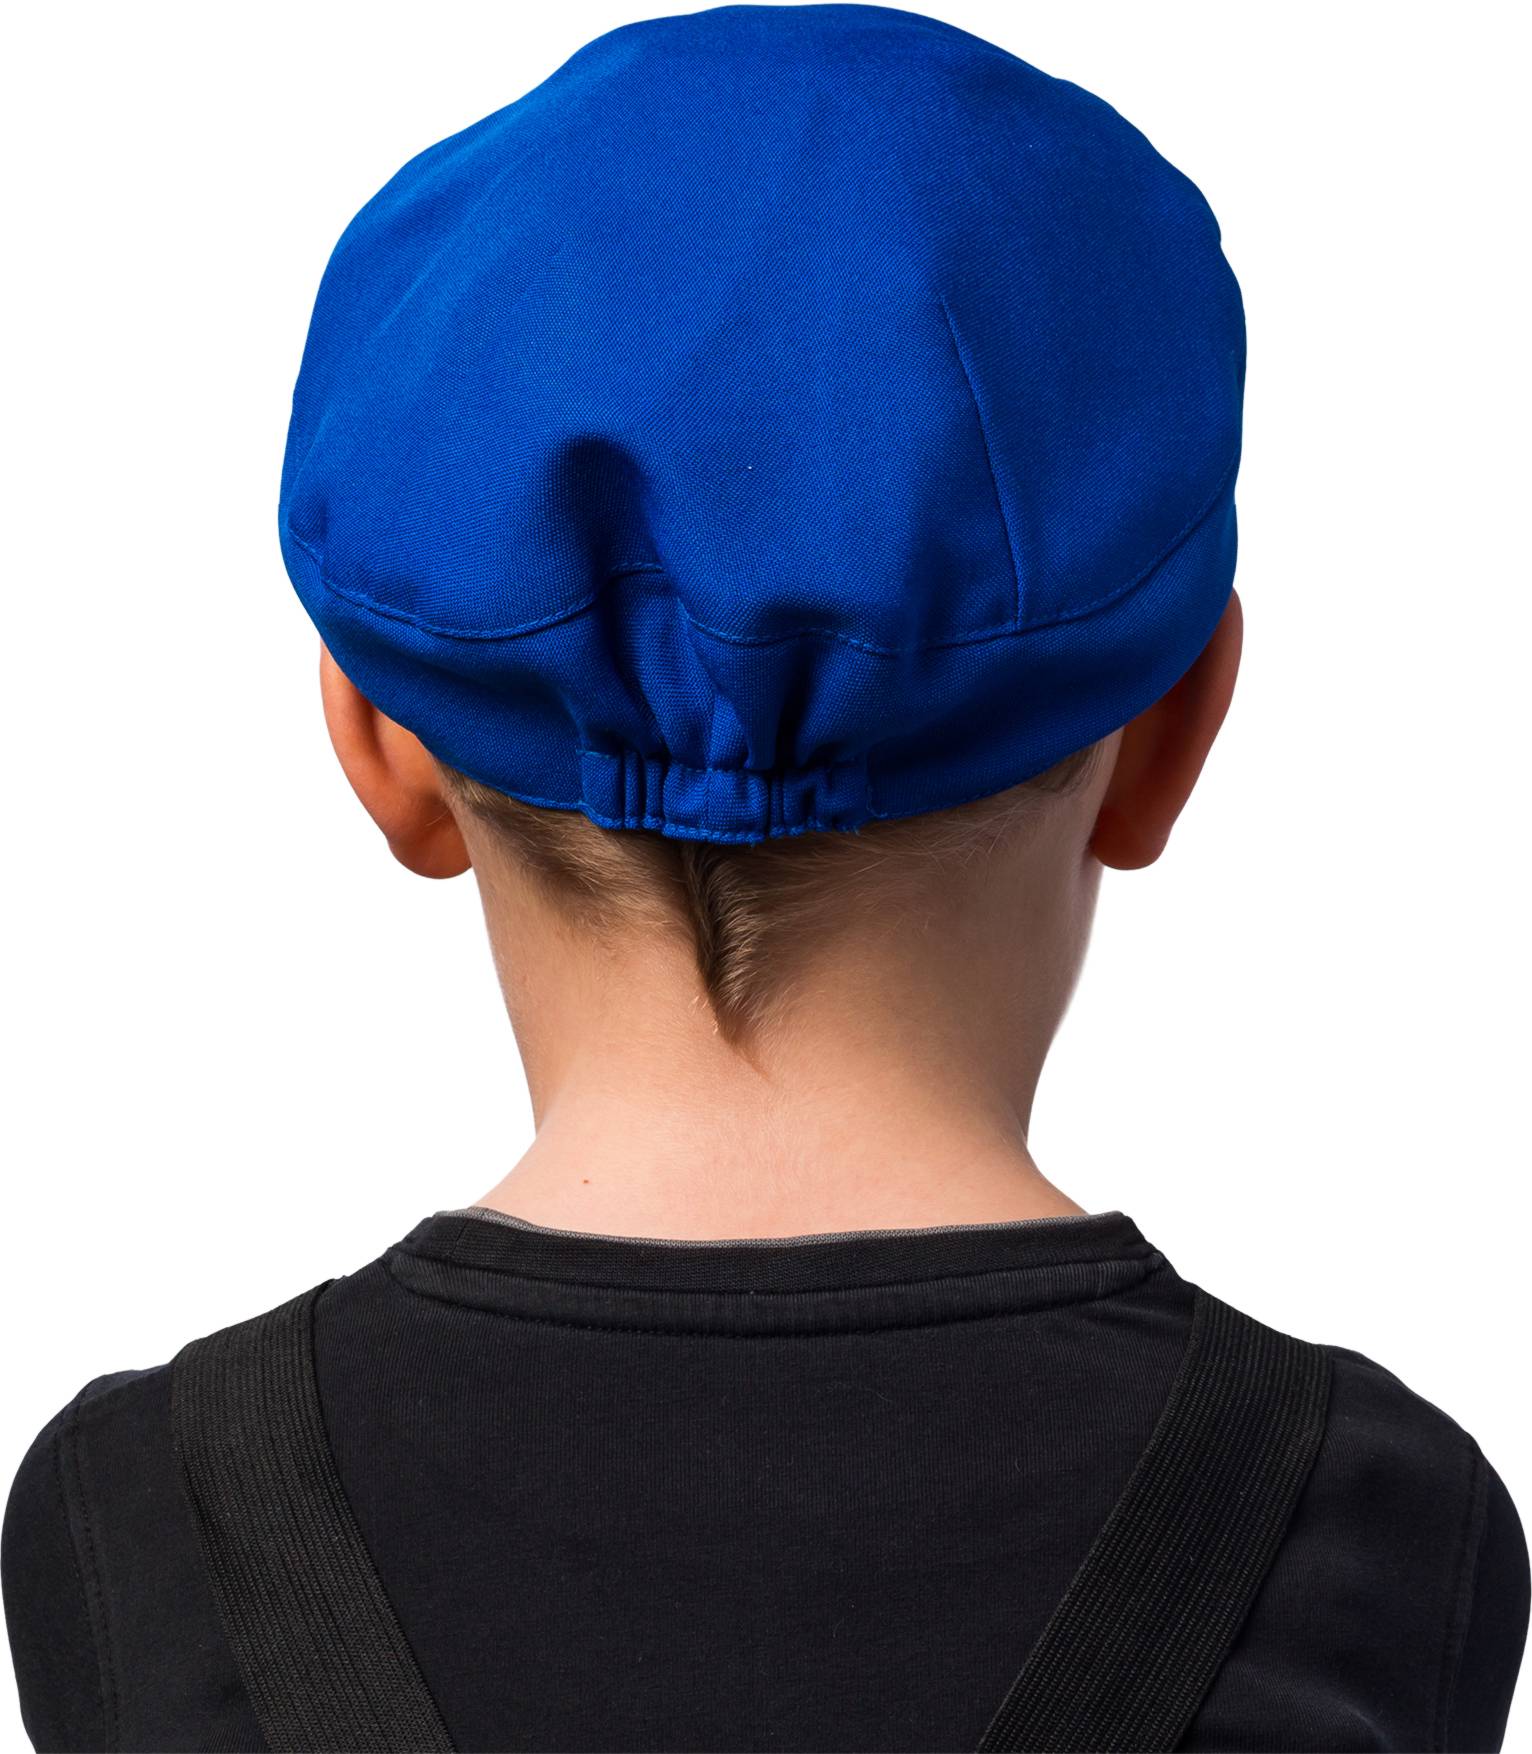 Shield cap, blue for children's